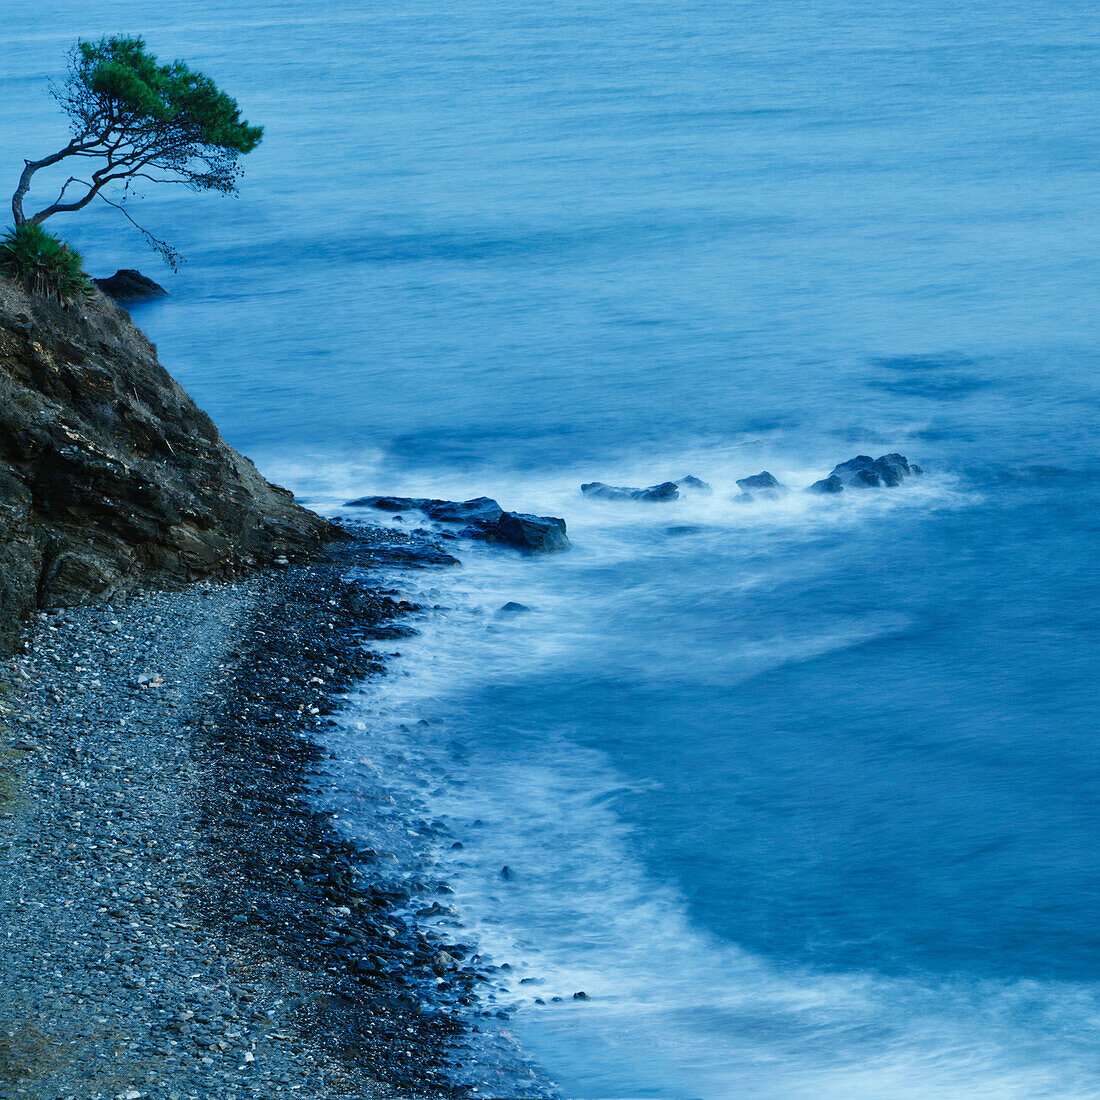 'Isolated Tree On A Cliff Overlooking A Pebble Beach Along The Coast; Benalmadena-Costa, Malaga, Andalusia, Spain'